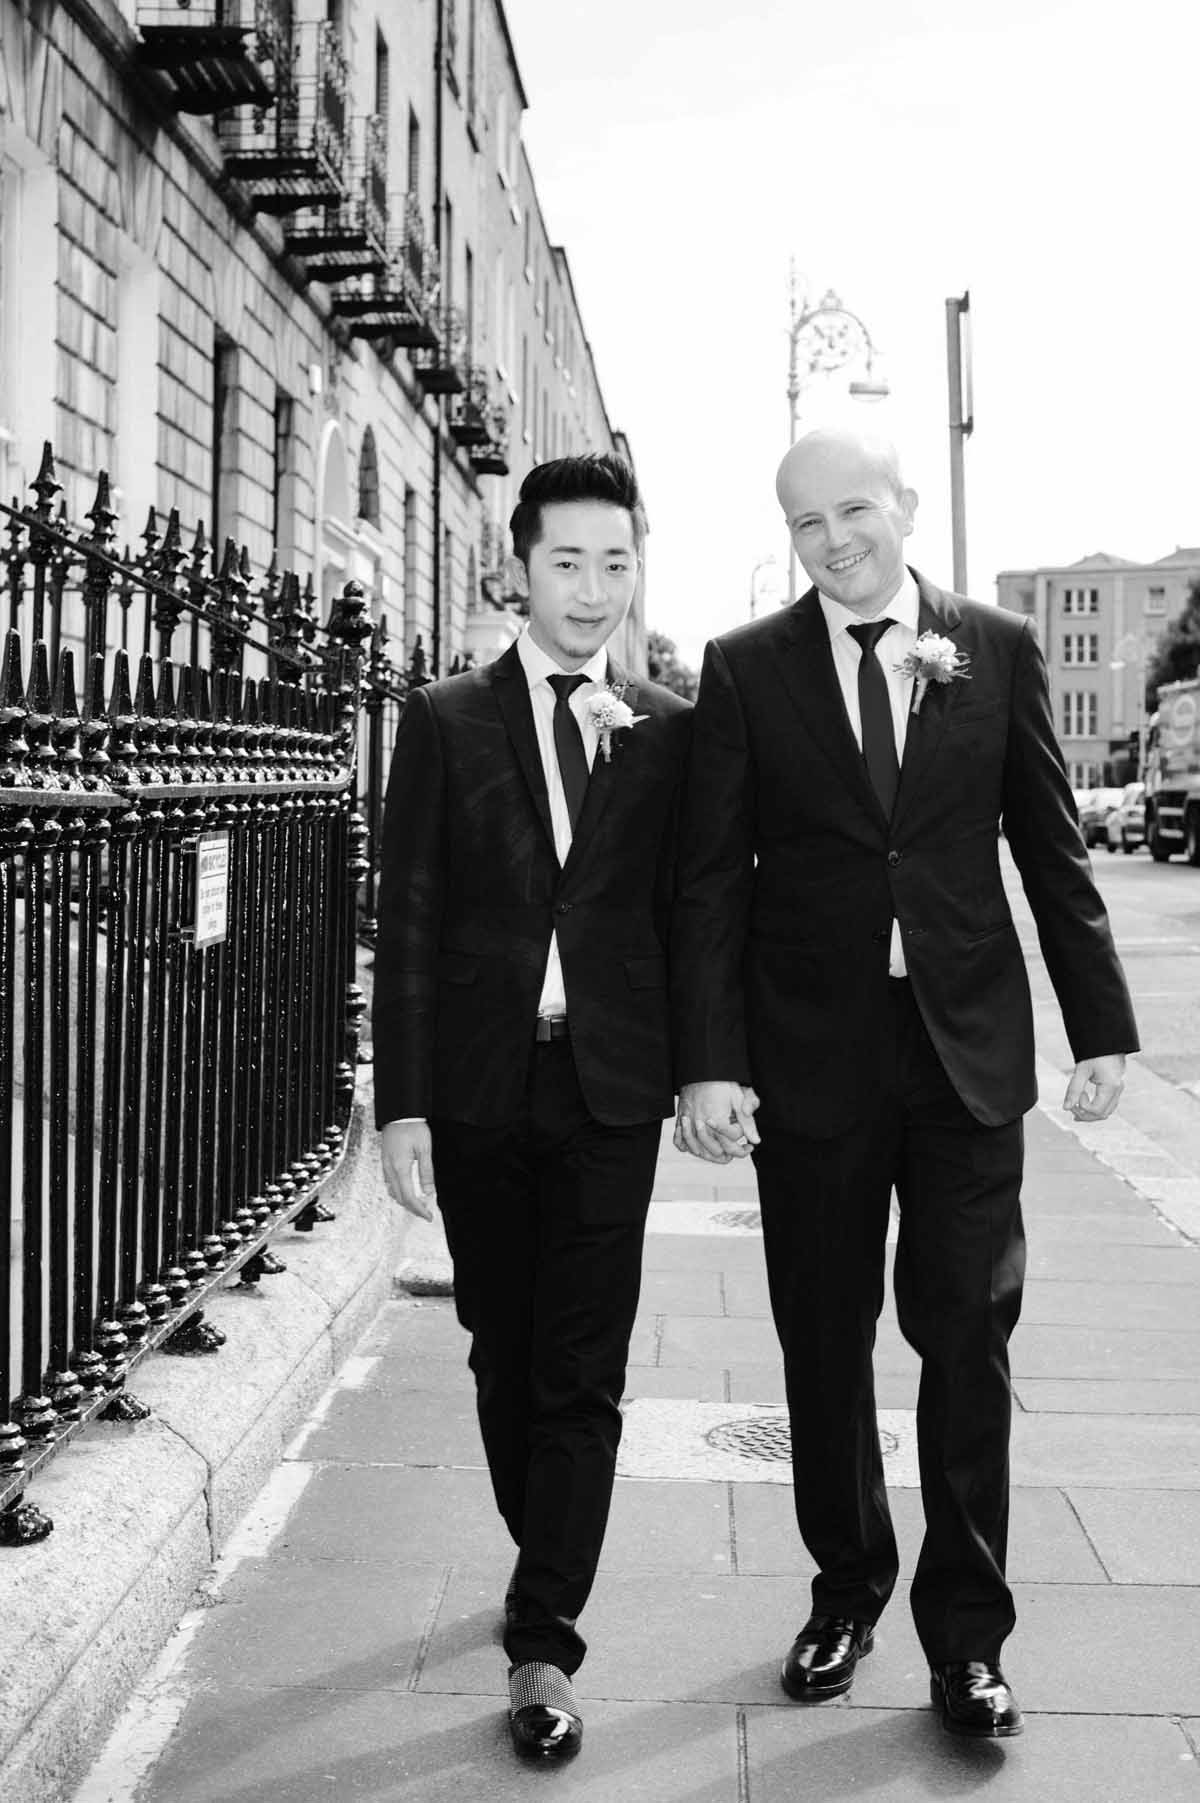 LGBT wedding photographer photographs two grooms walking through Dublin on their wedding day